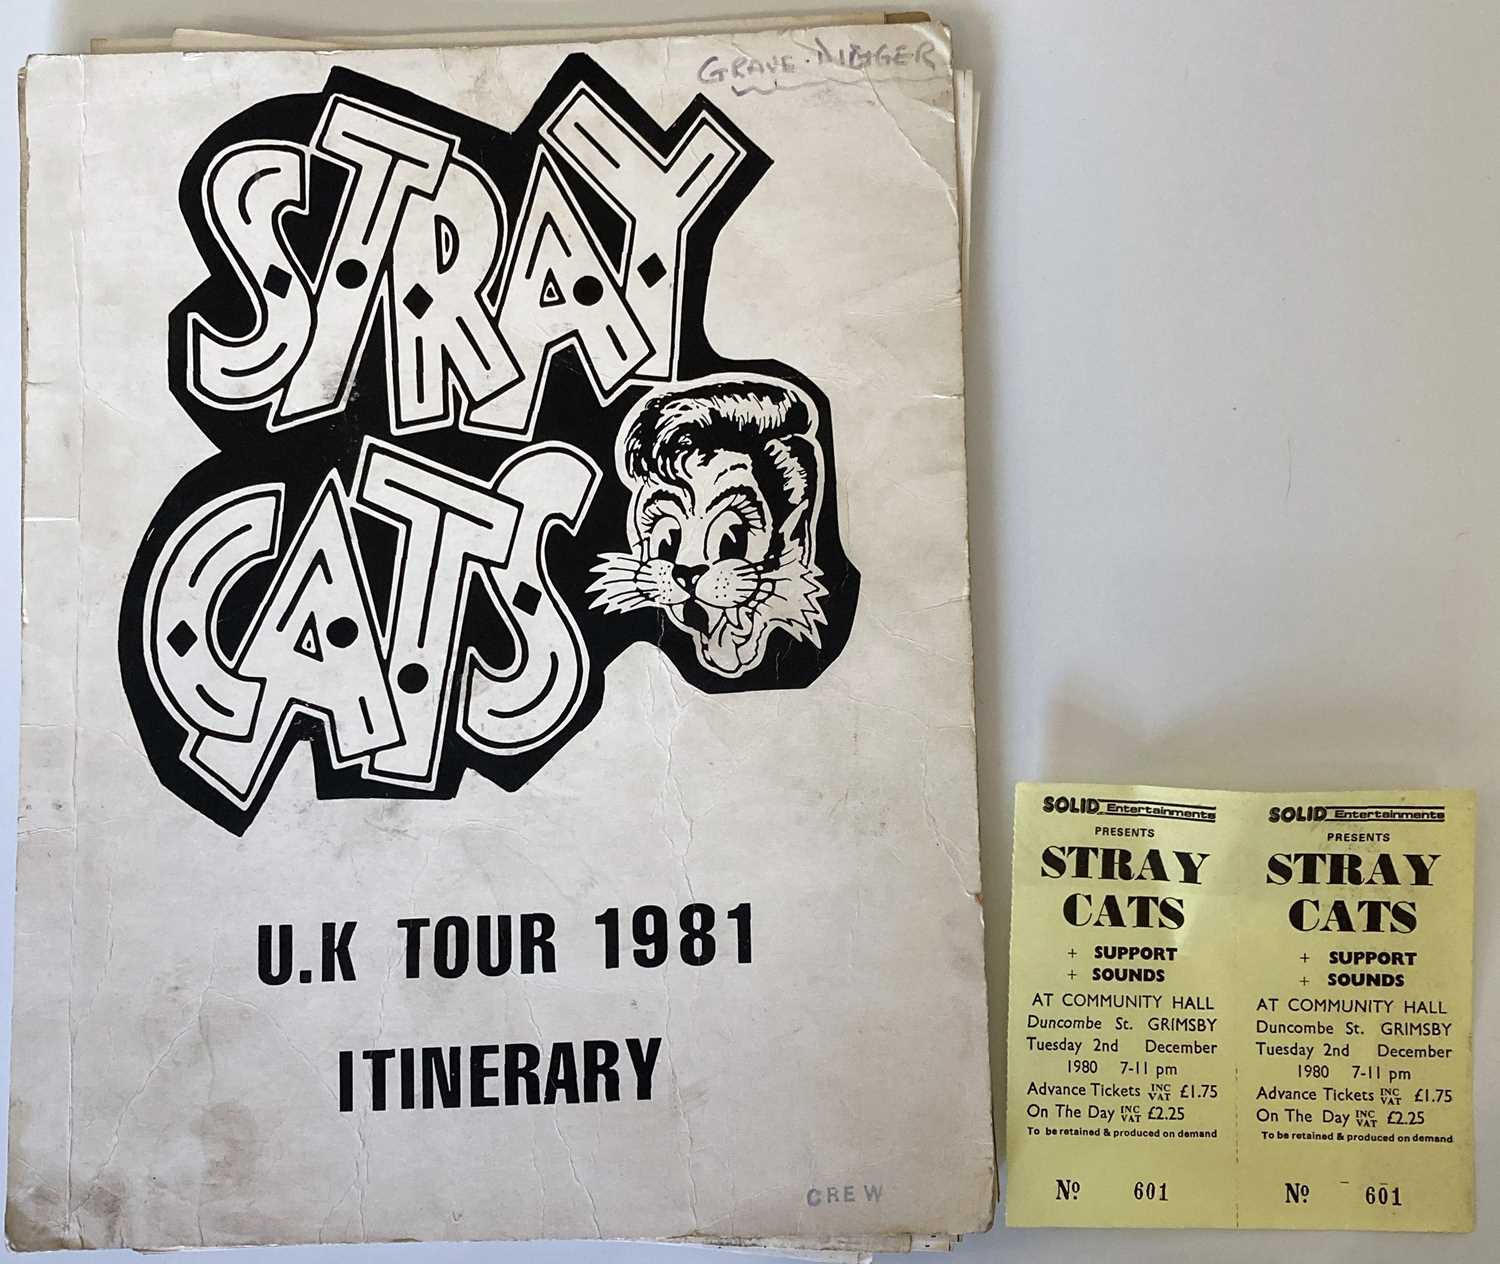 Lot 147 STRAY CATS 1981 TOUR ITINERARY.